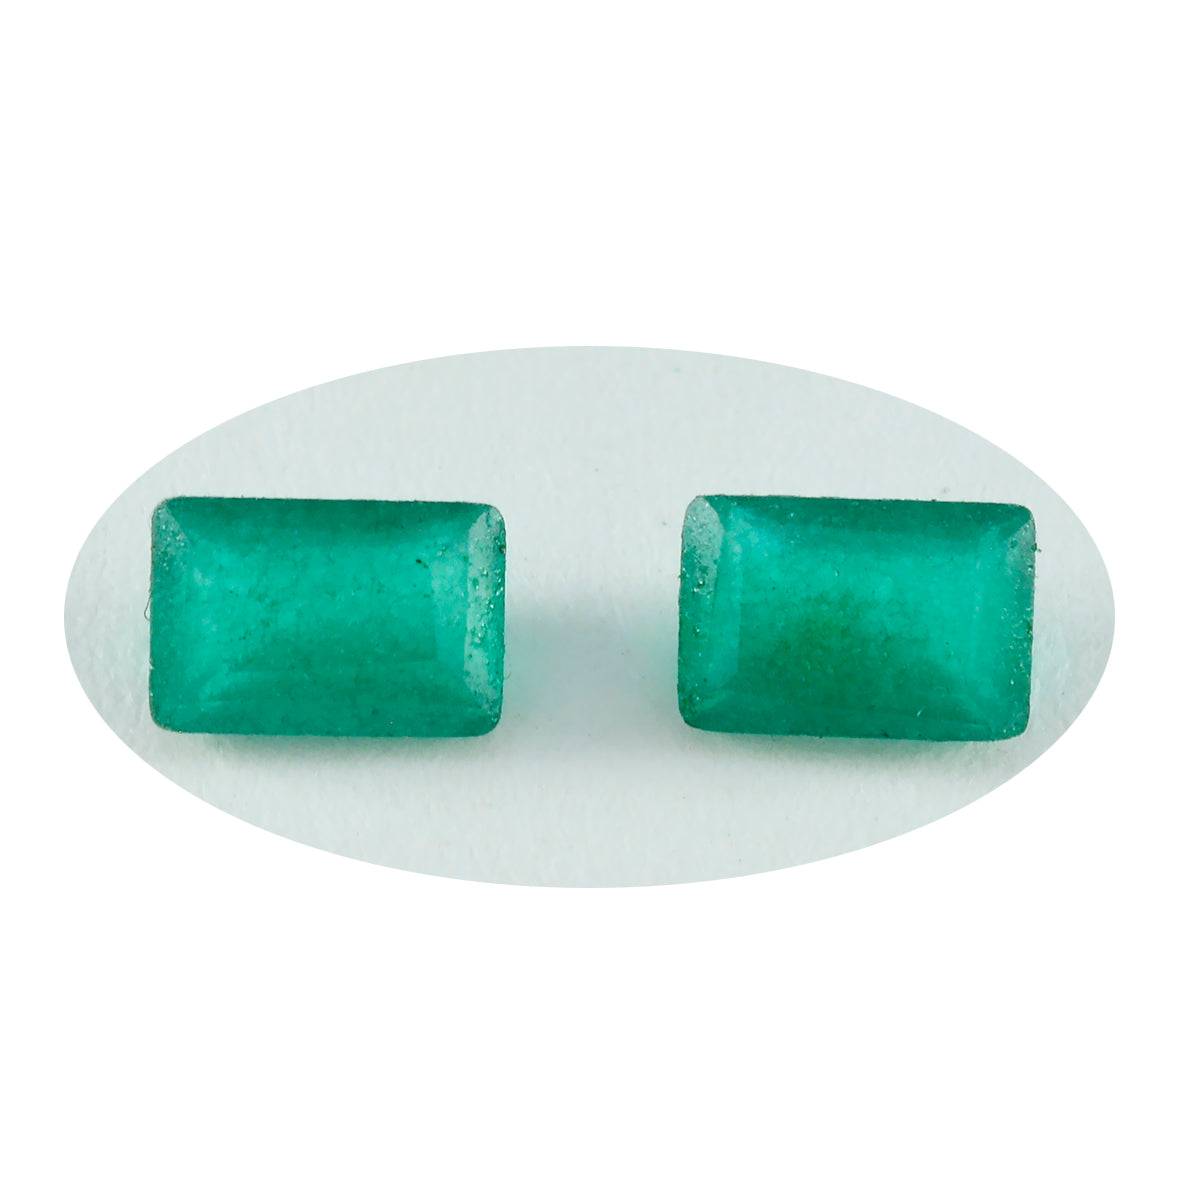 Riyogems 1PC natuurlijke groene jaspis gefacetteerd 9x11 mm achthoekige vorm verrassende kwaliteit losse edelstenen